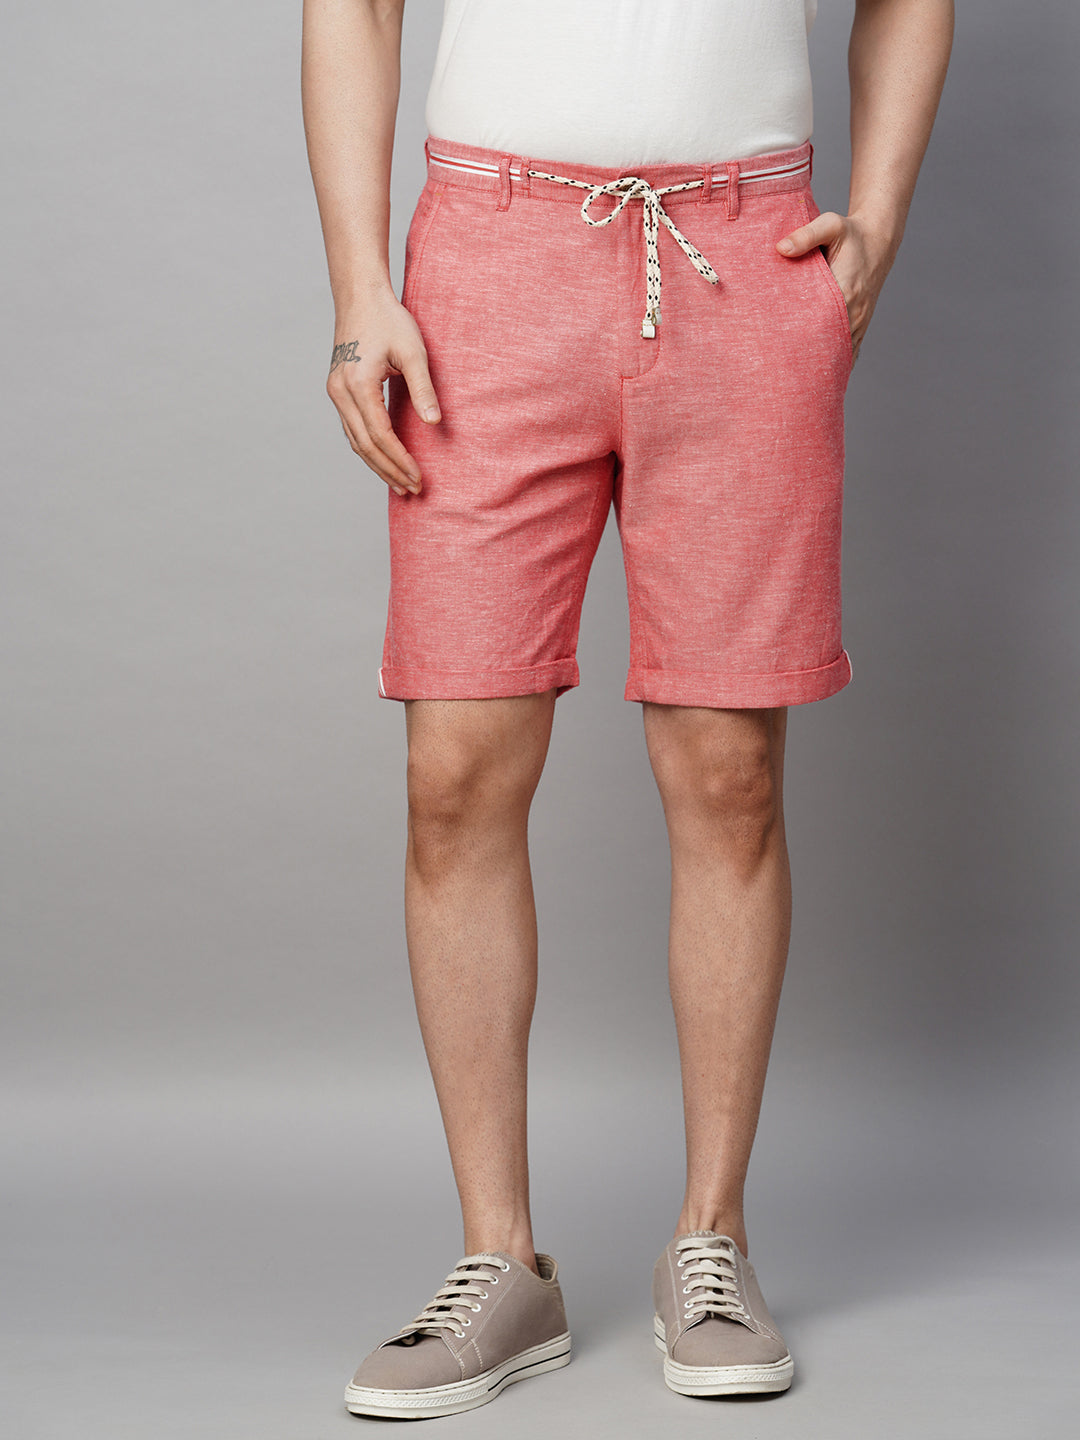 Men's Red Cotton Linen Regular Fit Shorts